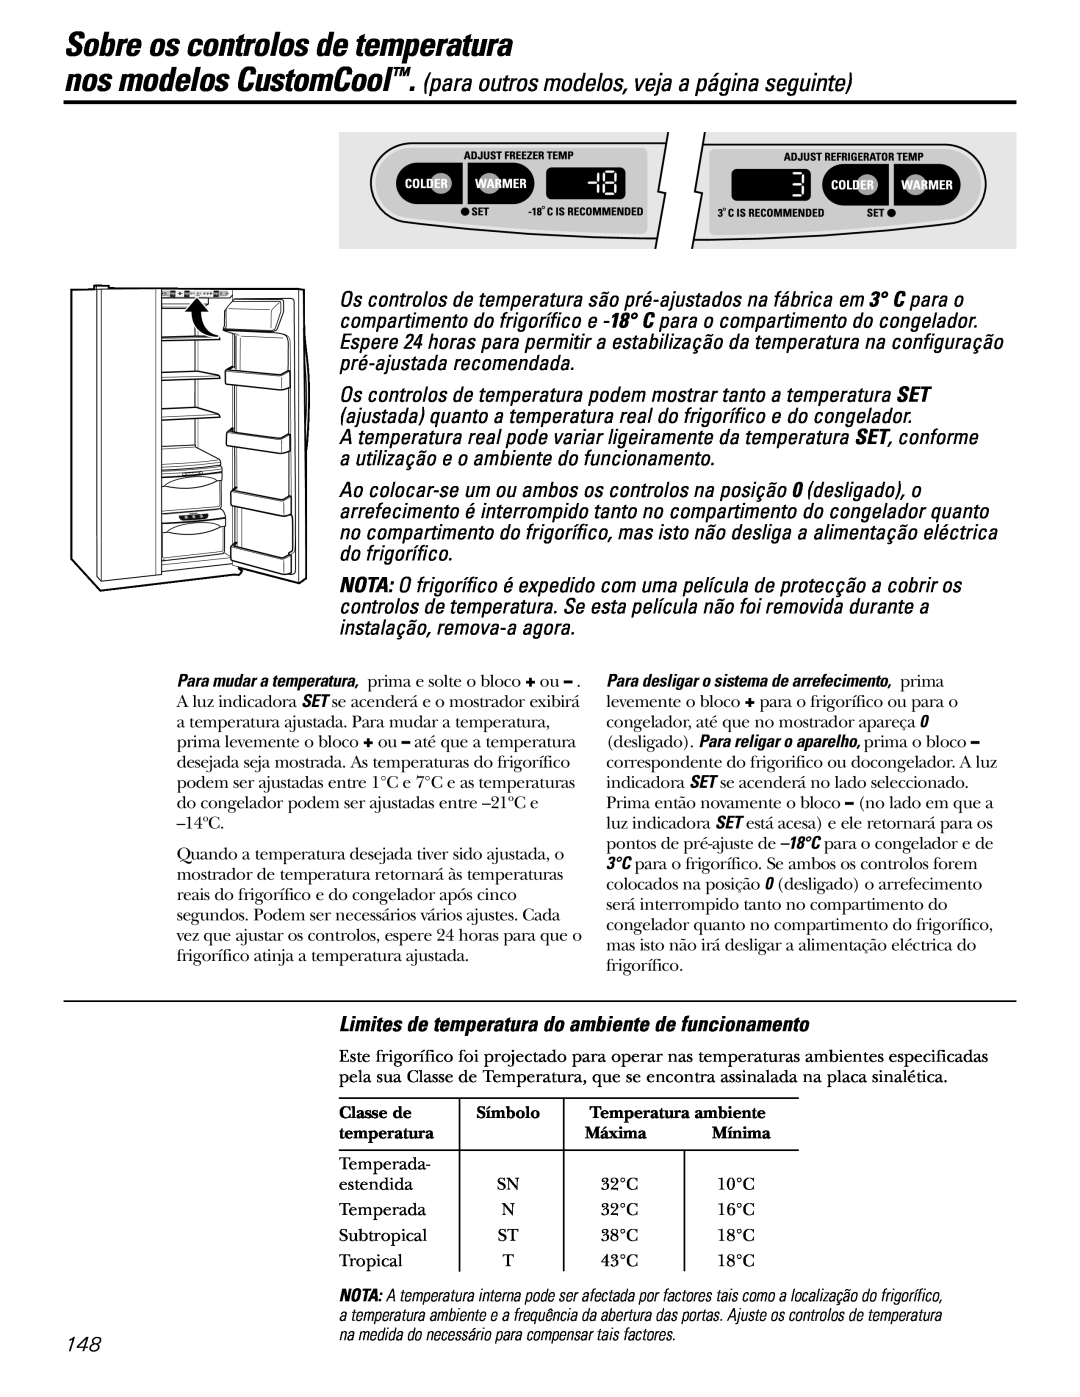 GE 21, 23, 25, 27, 29 installation instructions Sobre os controlos de temperatura nos modelos CustomCool 